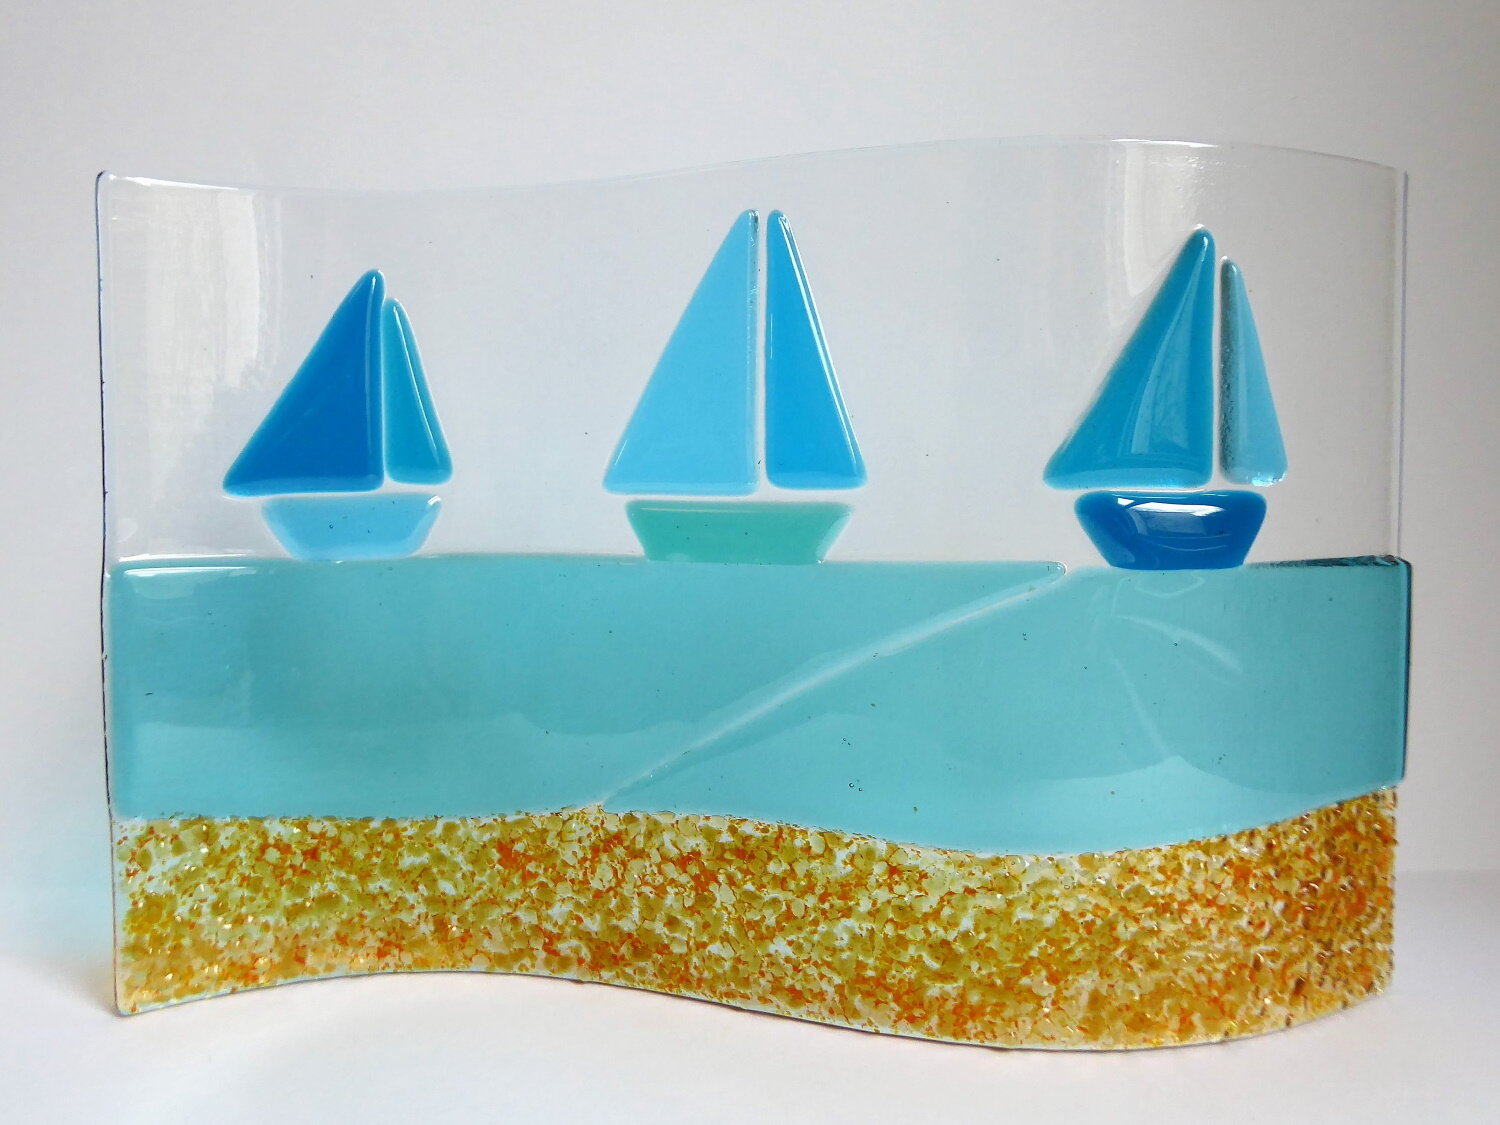 eva-glass-design-blue-boats-beach-seaside-fused-glass-wave-sculpture.jpg